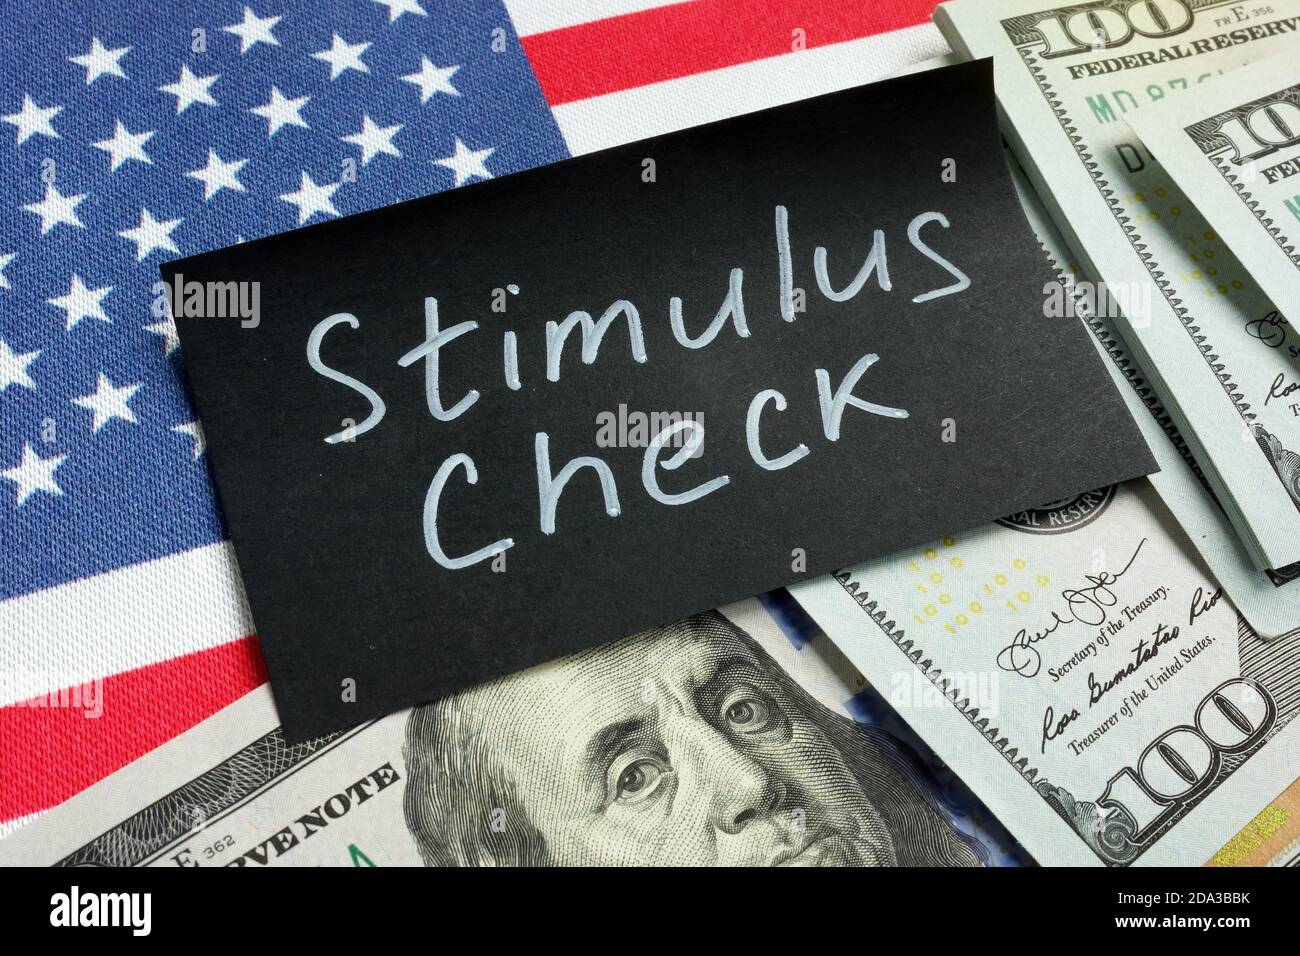 Stimulus check words, money and USA flag. Stock Photo